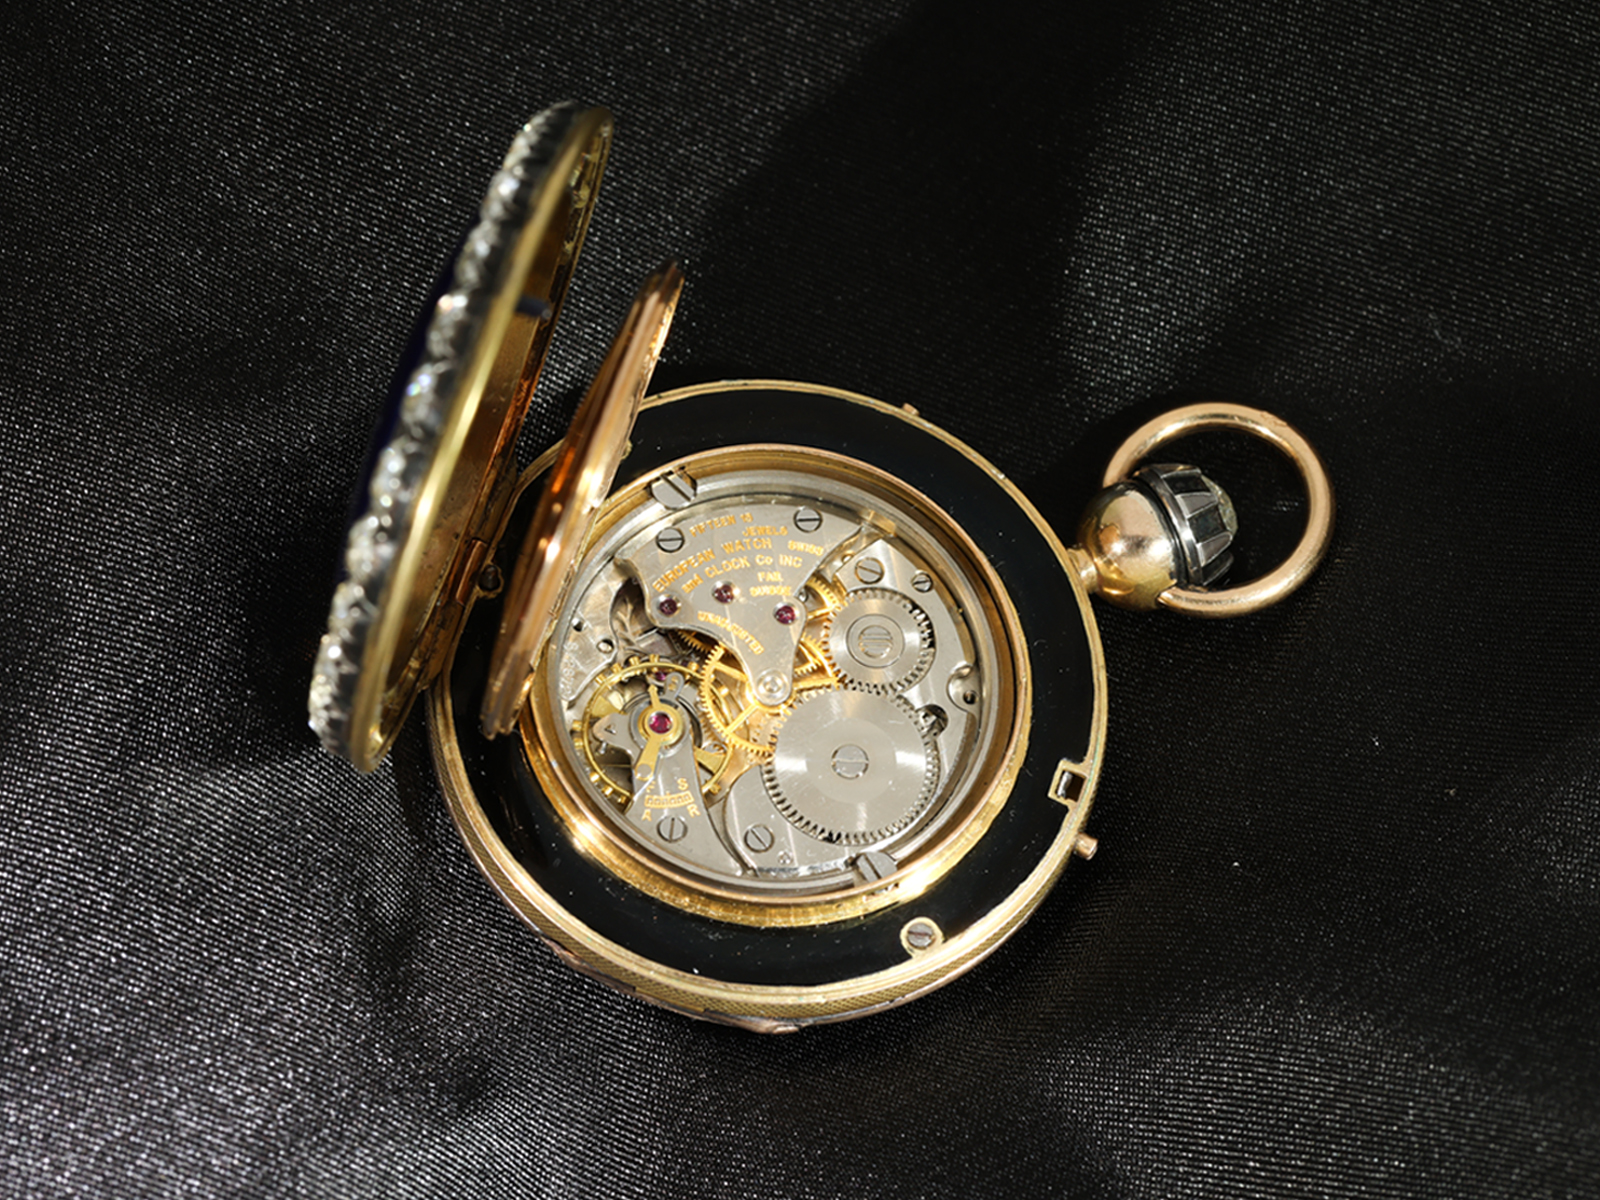 Pocket watch: unique, gold/enamel hunting case watch with abundant diamond setting, probably moderni - Image 6 of 8